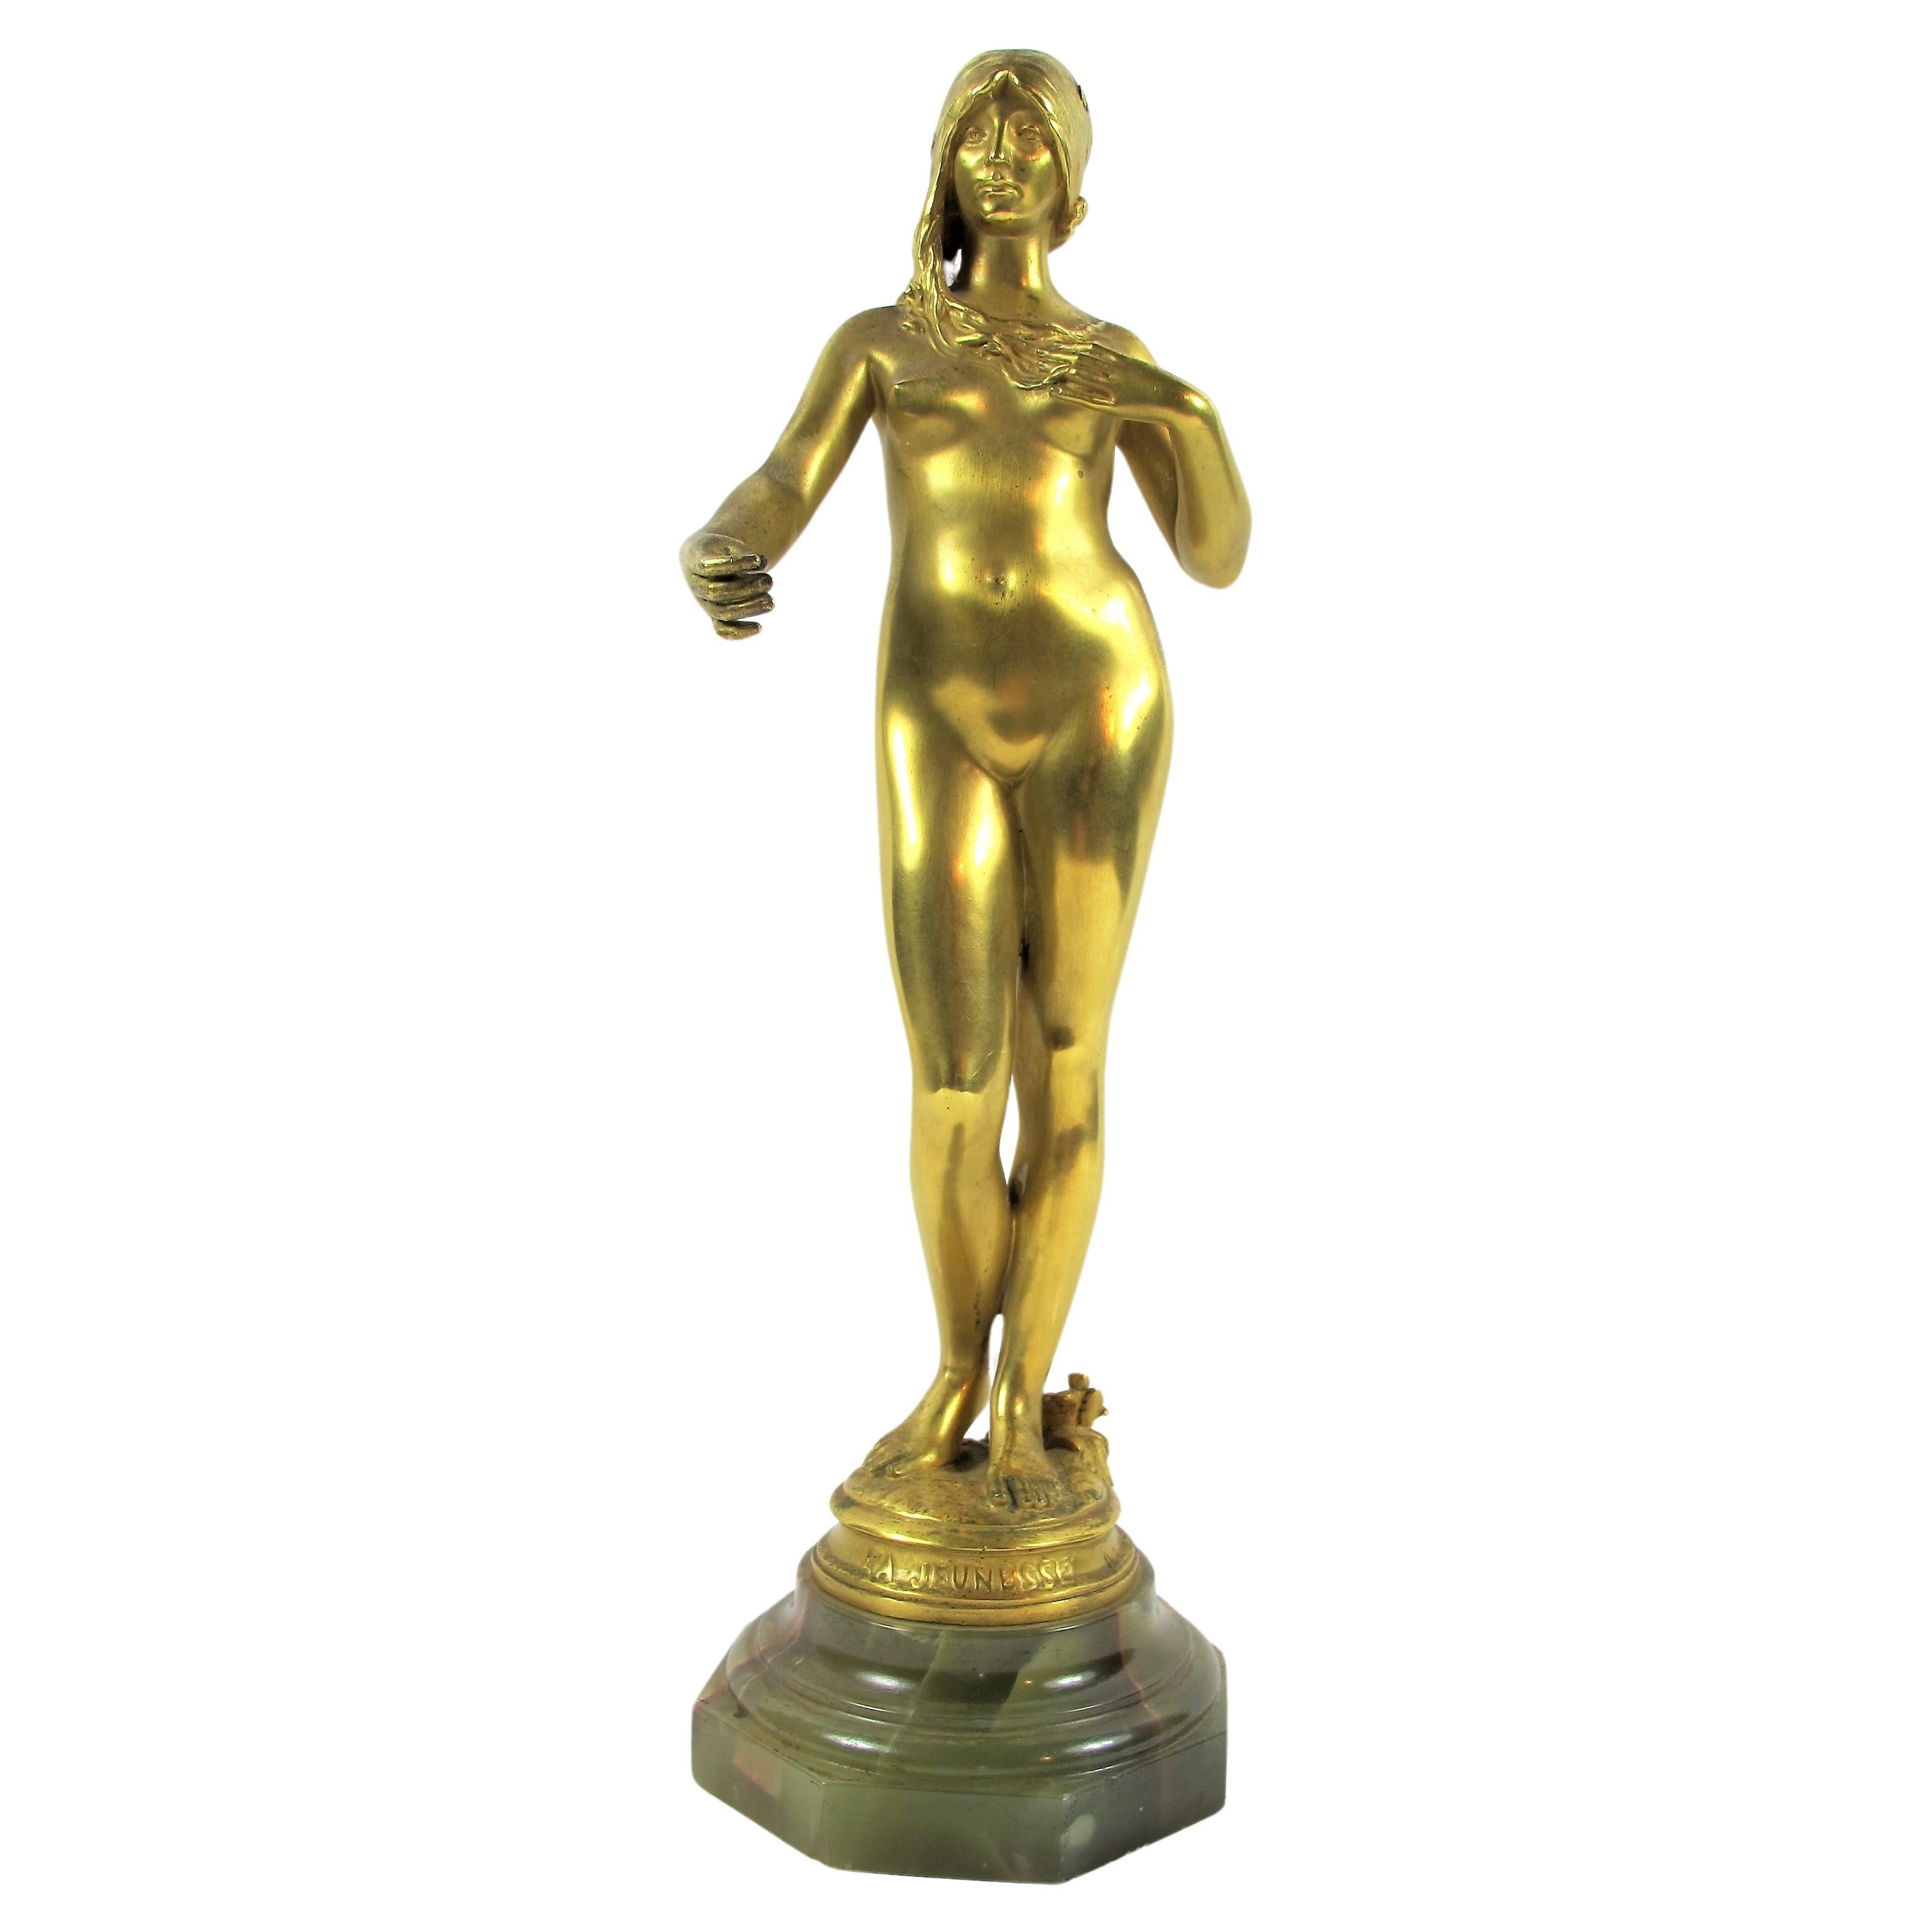 Gilt Bronze Sculpture by Antonin Carlès (1851-1919) “Youth”